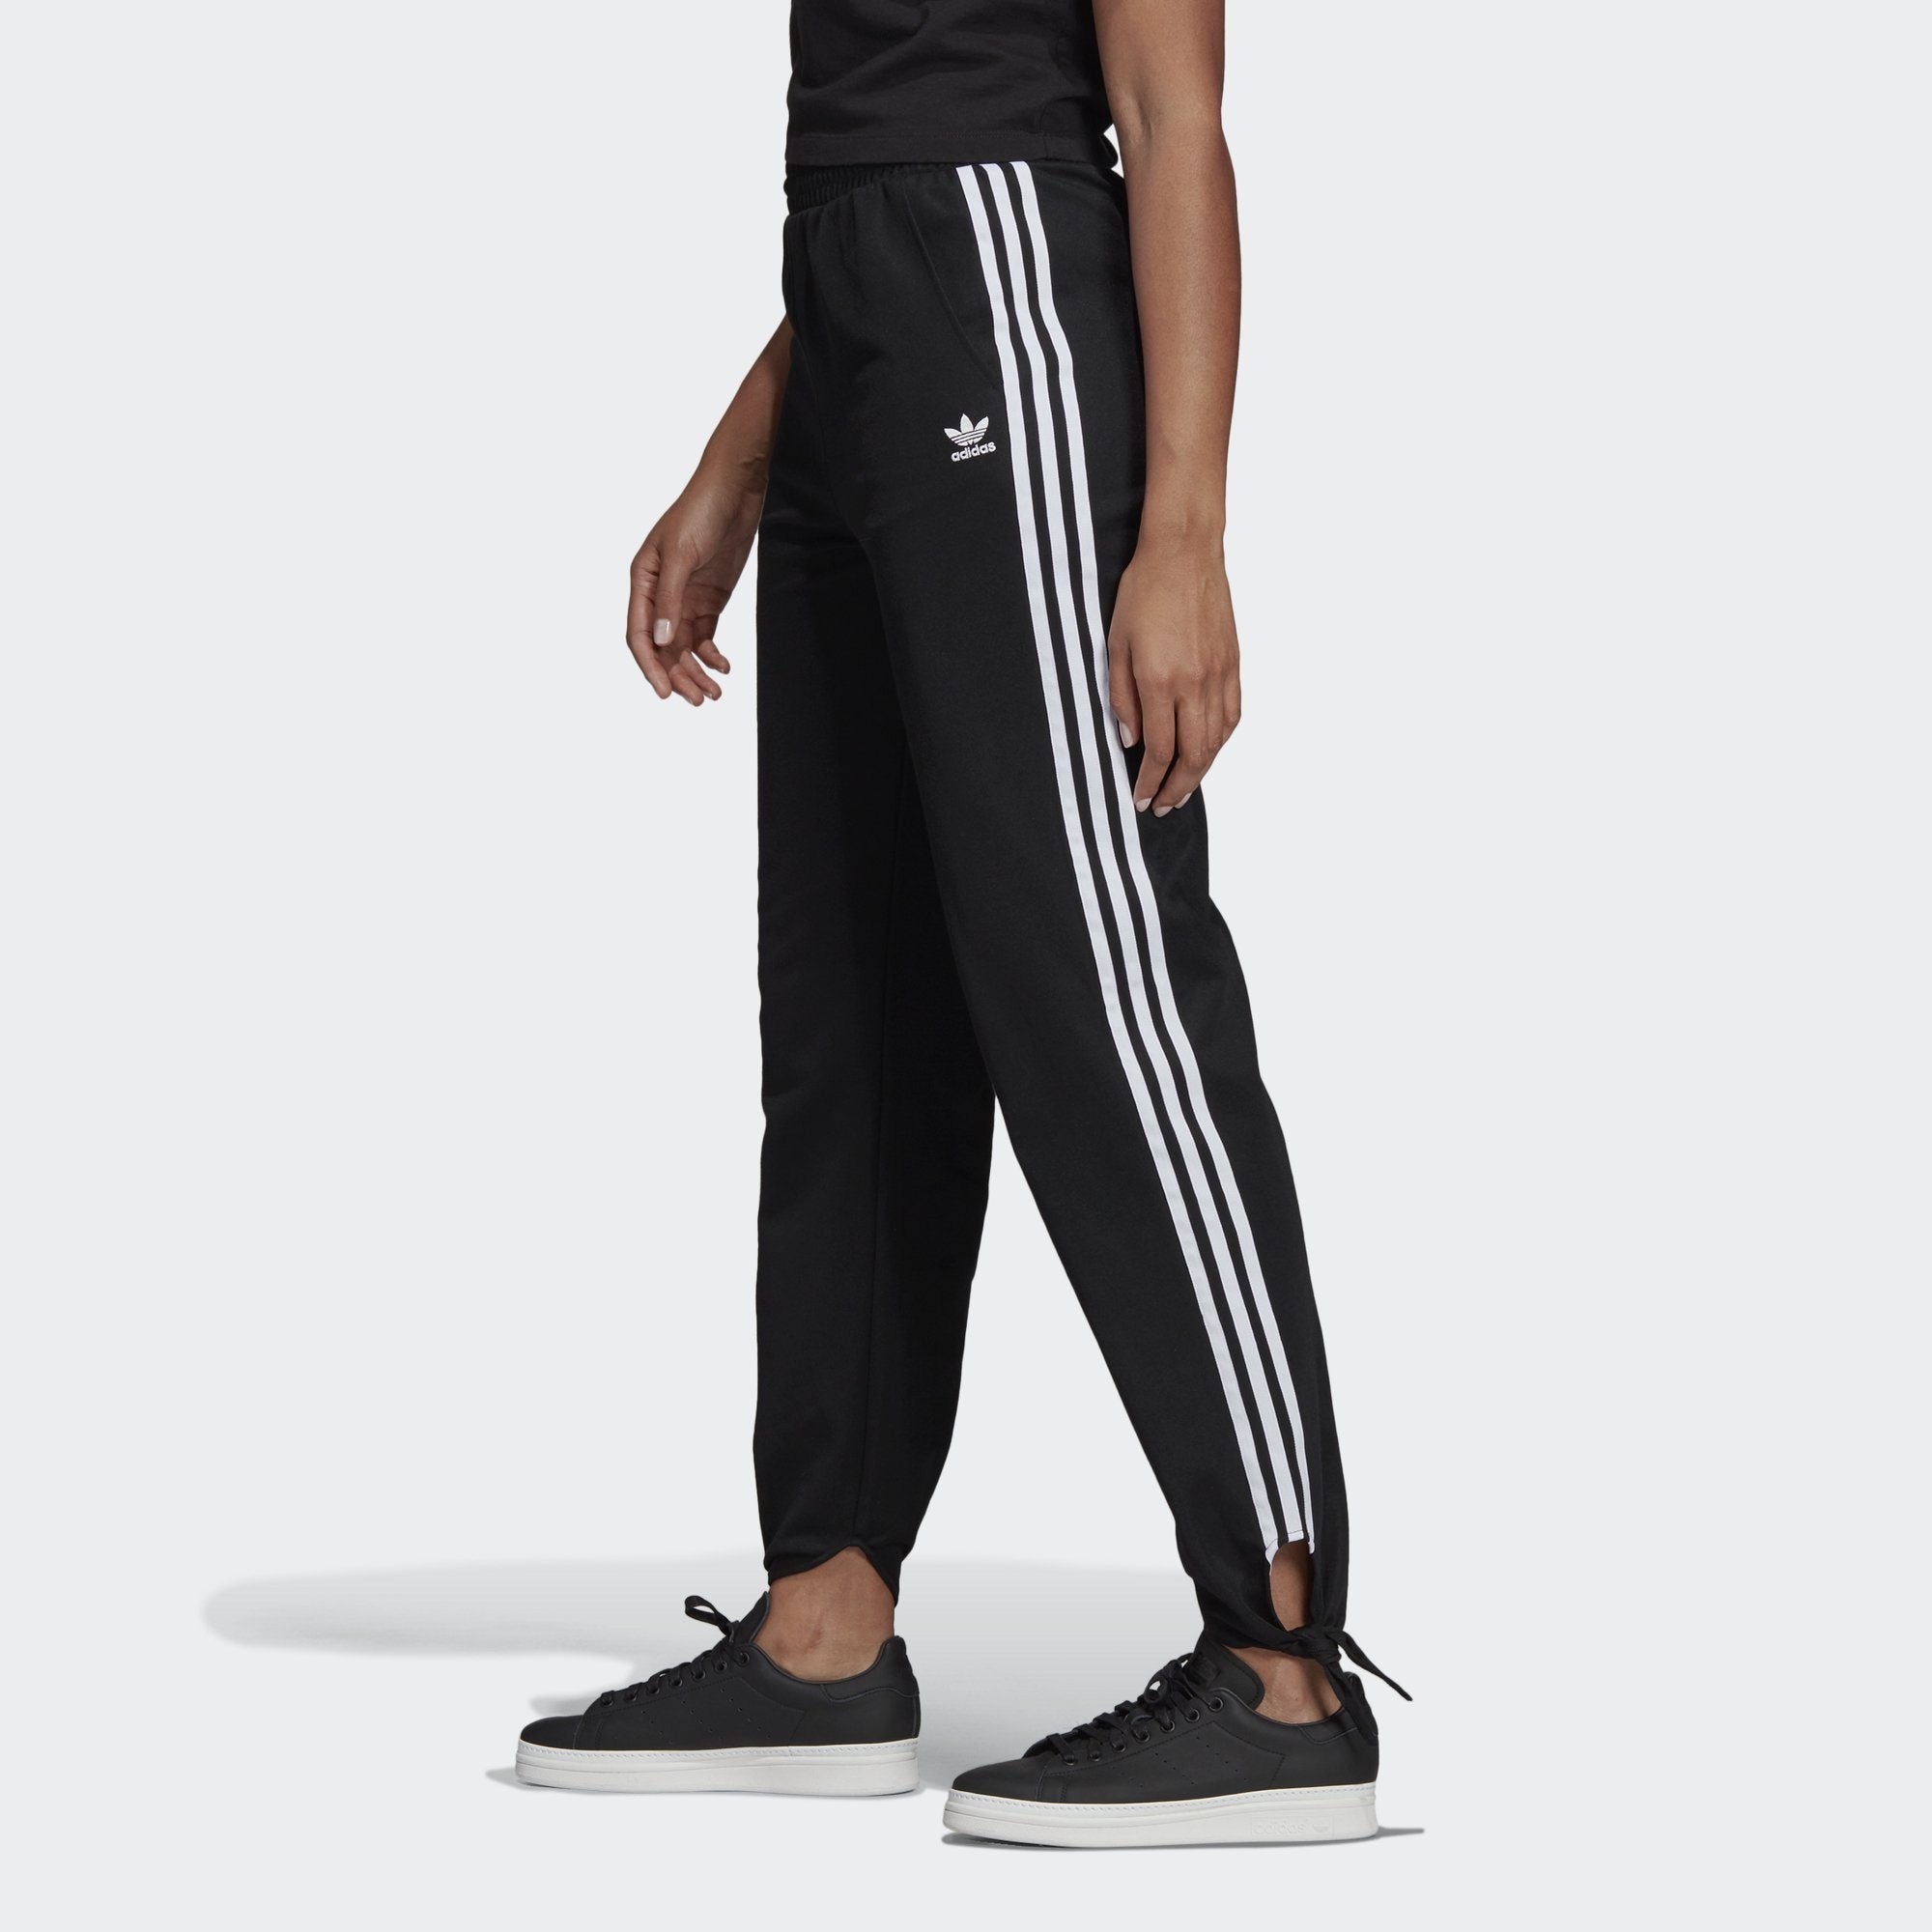 Adidas Originals Track Pant Black Women FH7999 ()